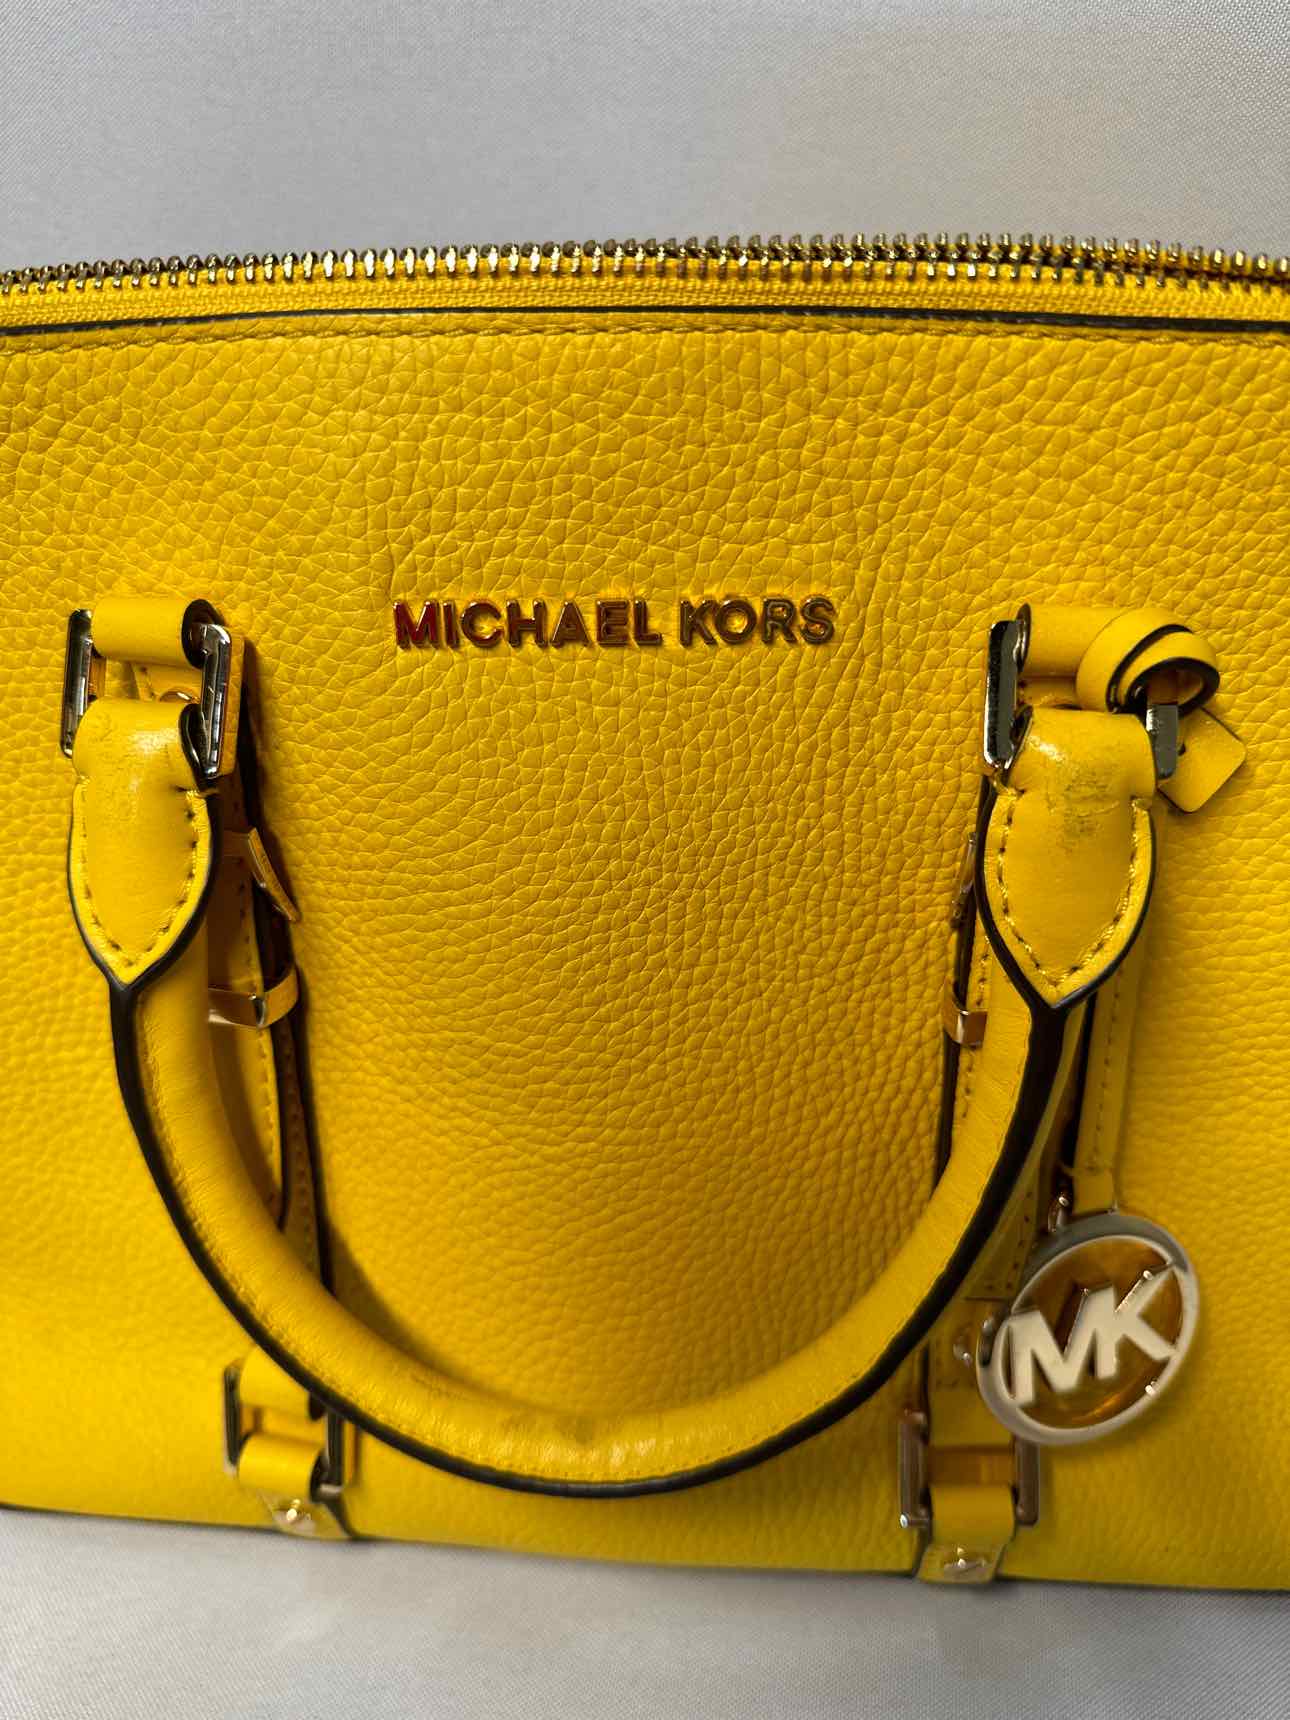 Michael Kors Yellow Leather Satchel